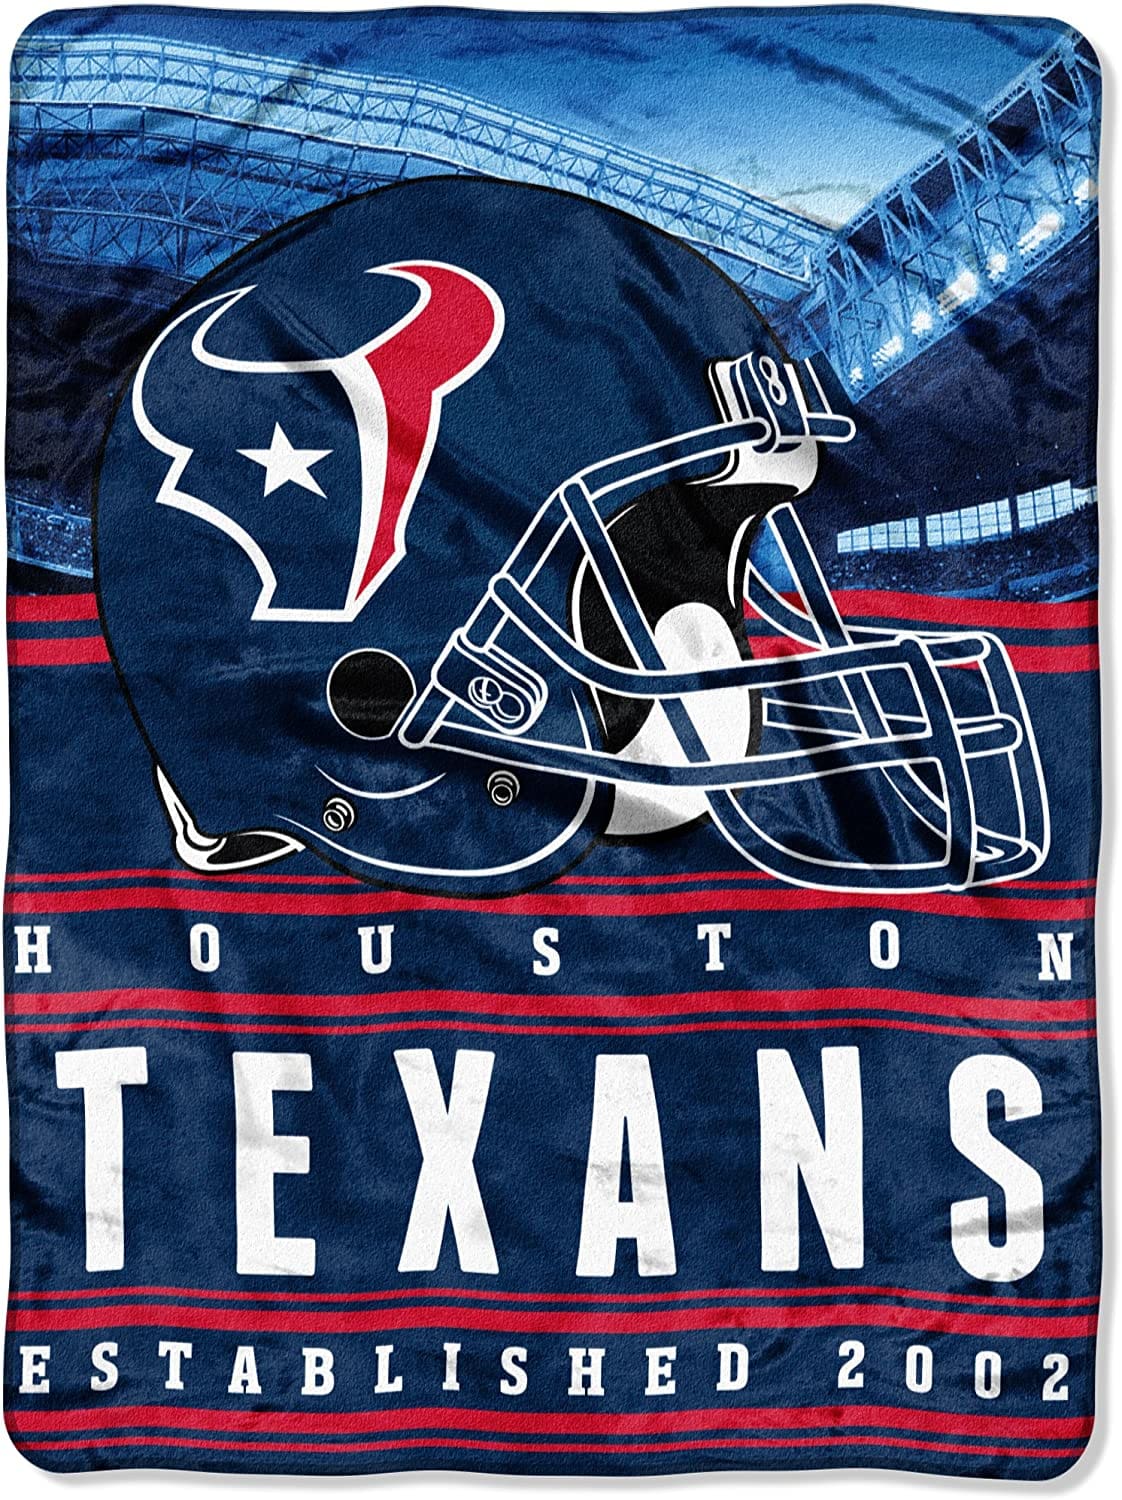 Nfl Houston Texans Fleece Blanket